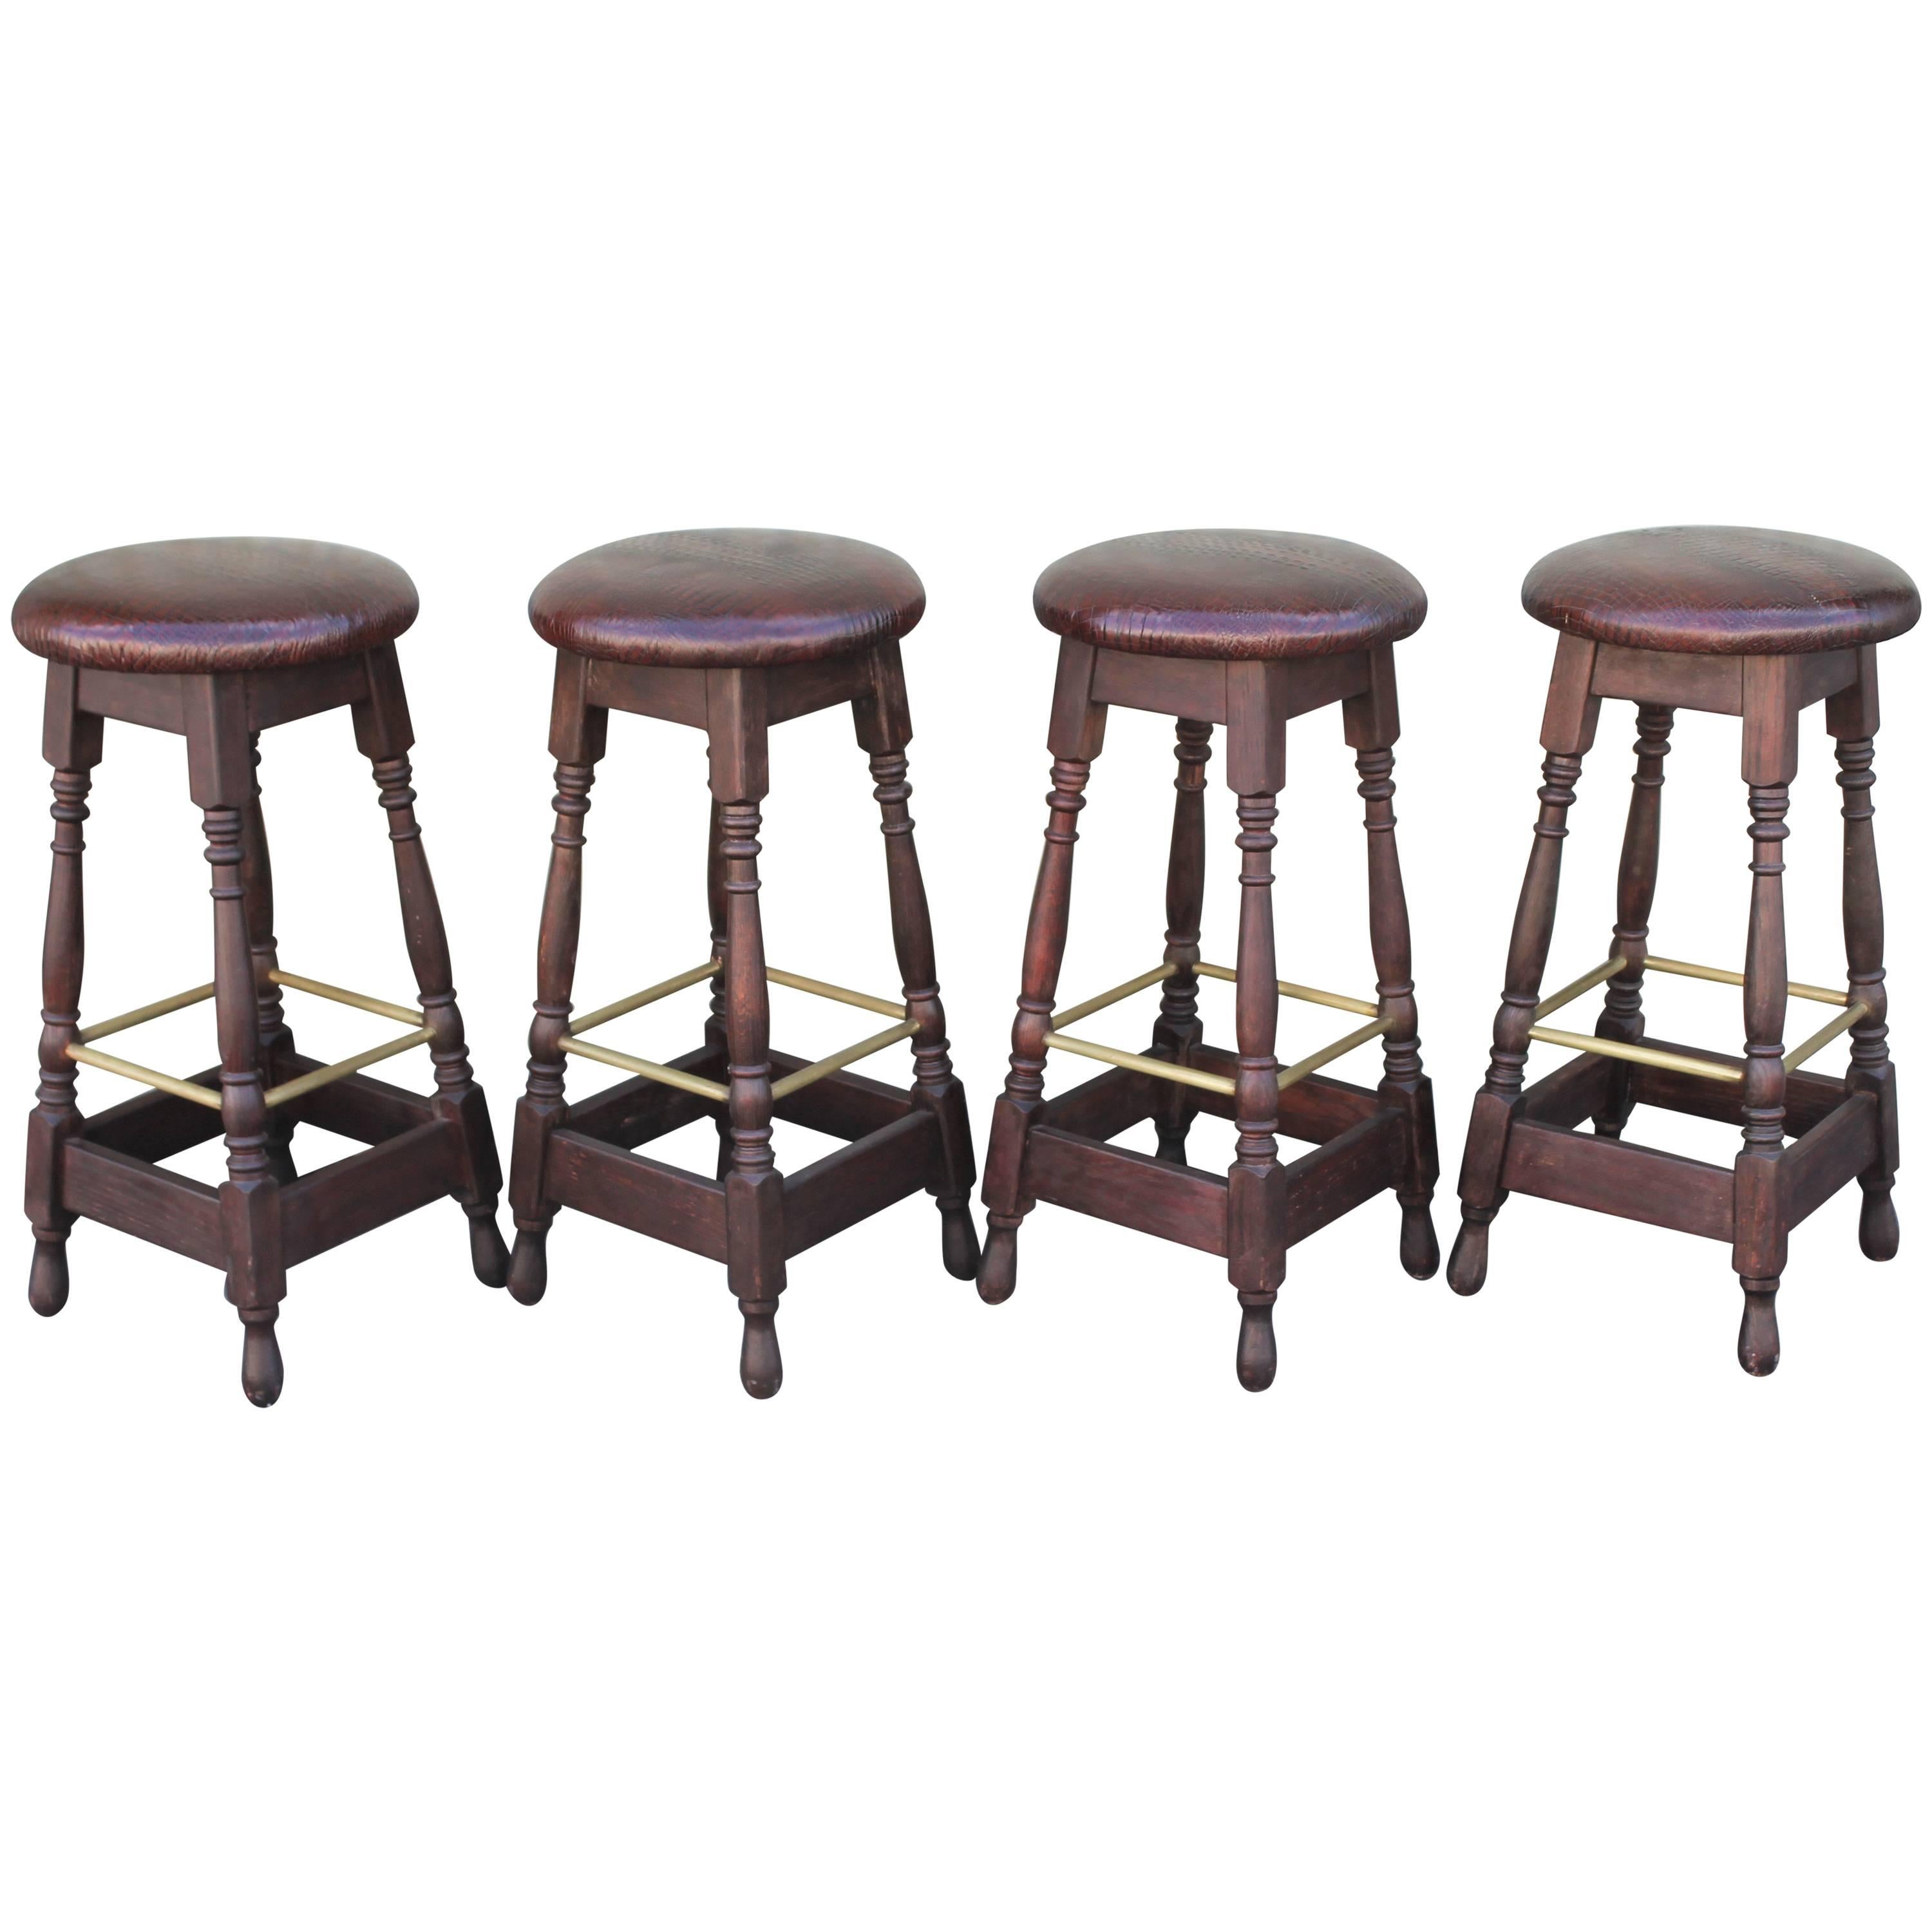 Set of Four Early 1900s Bar Stools from Philadelphia, Pennsylvania